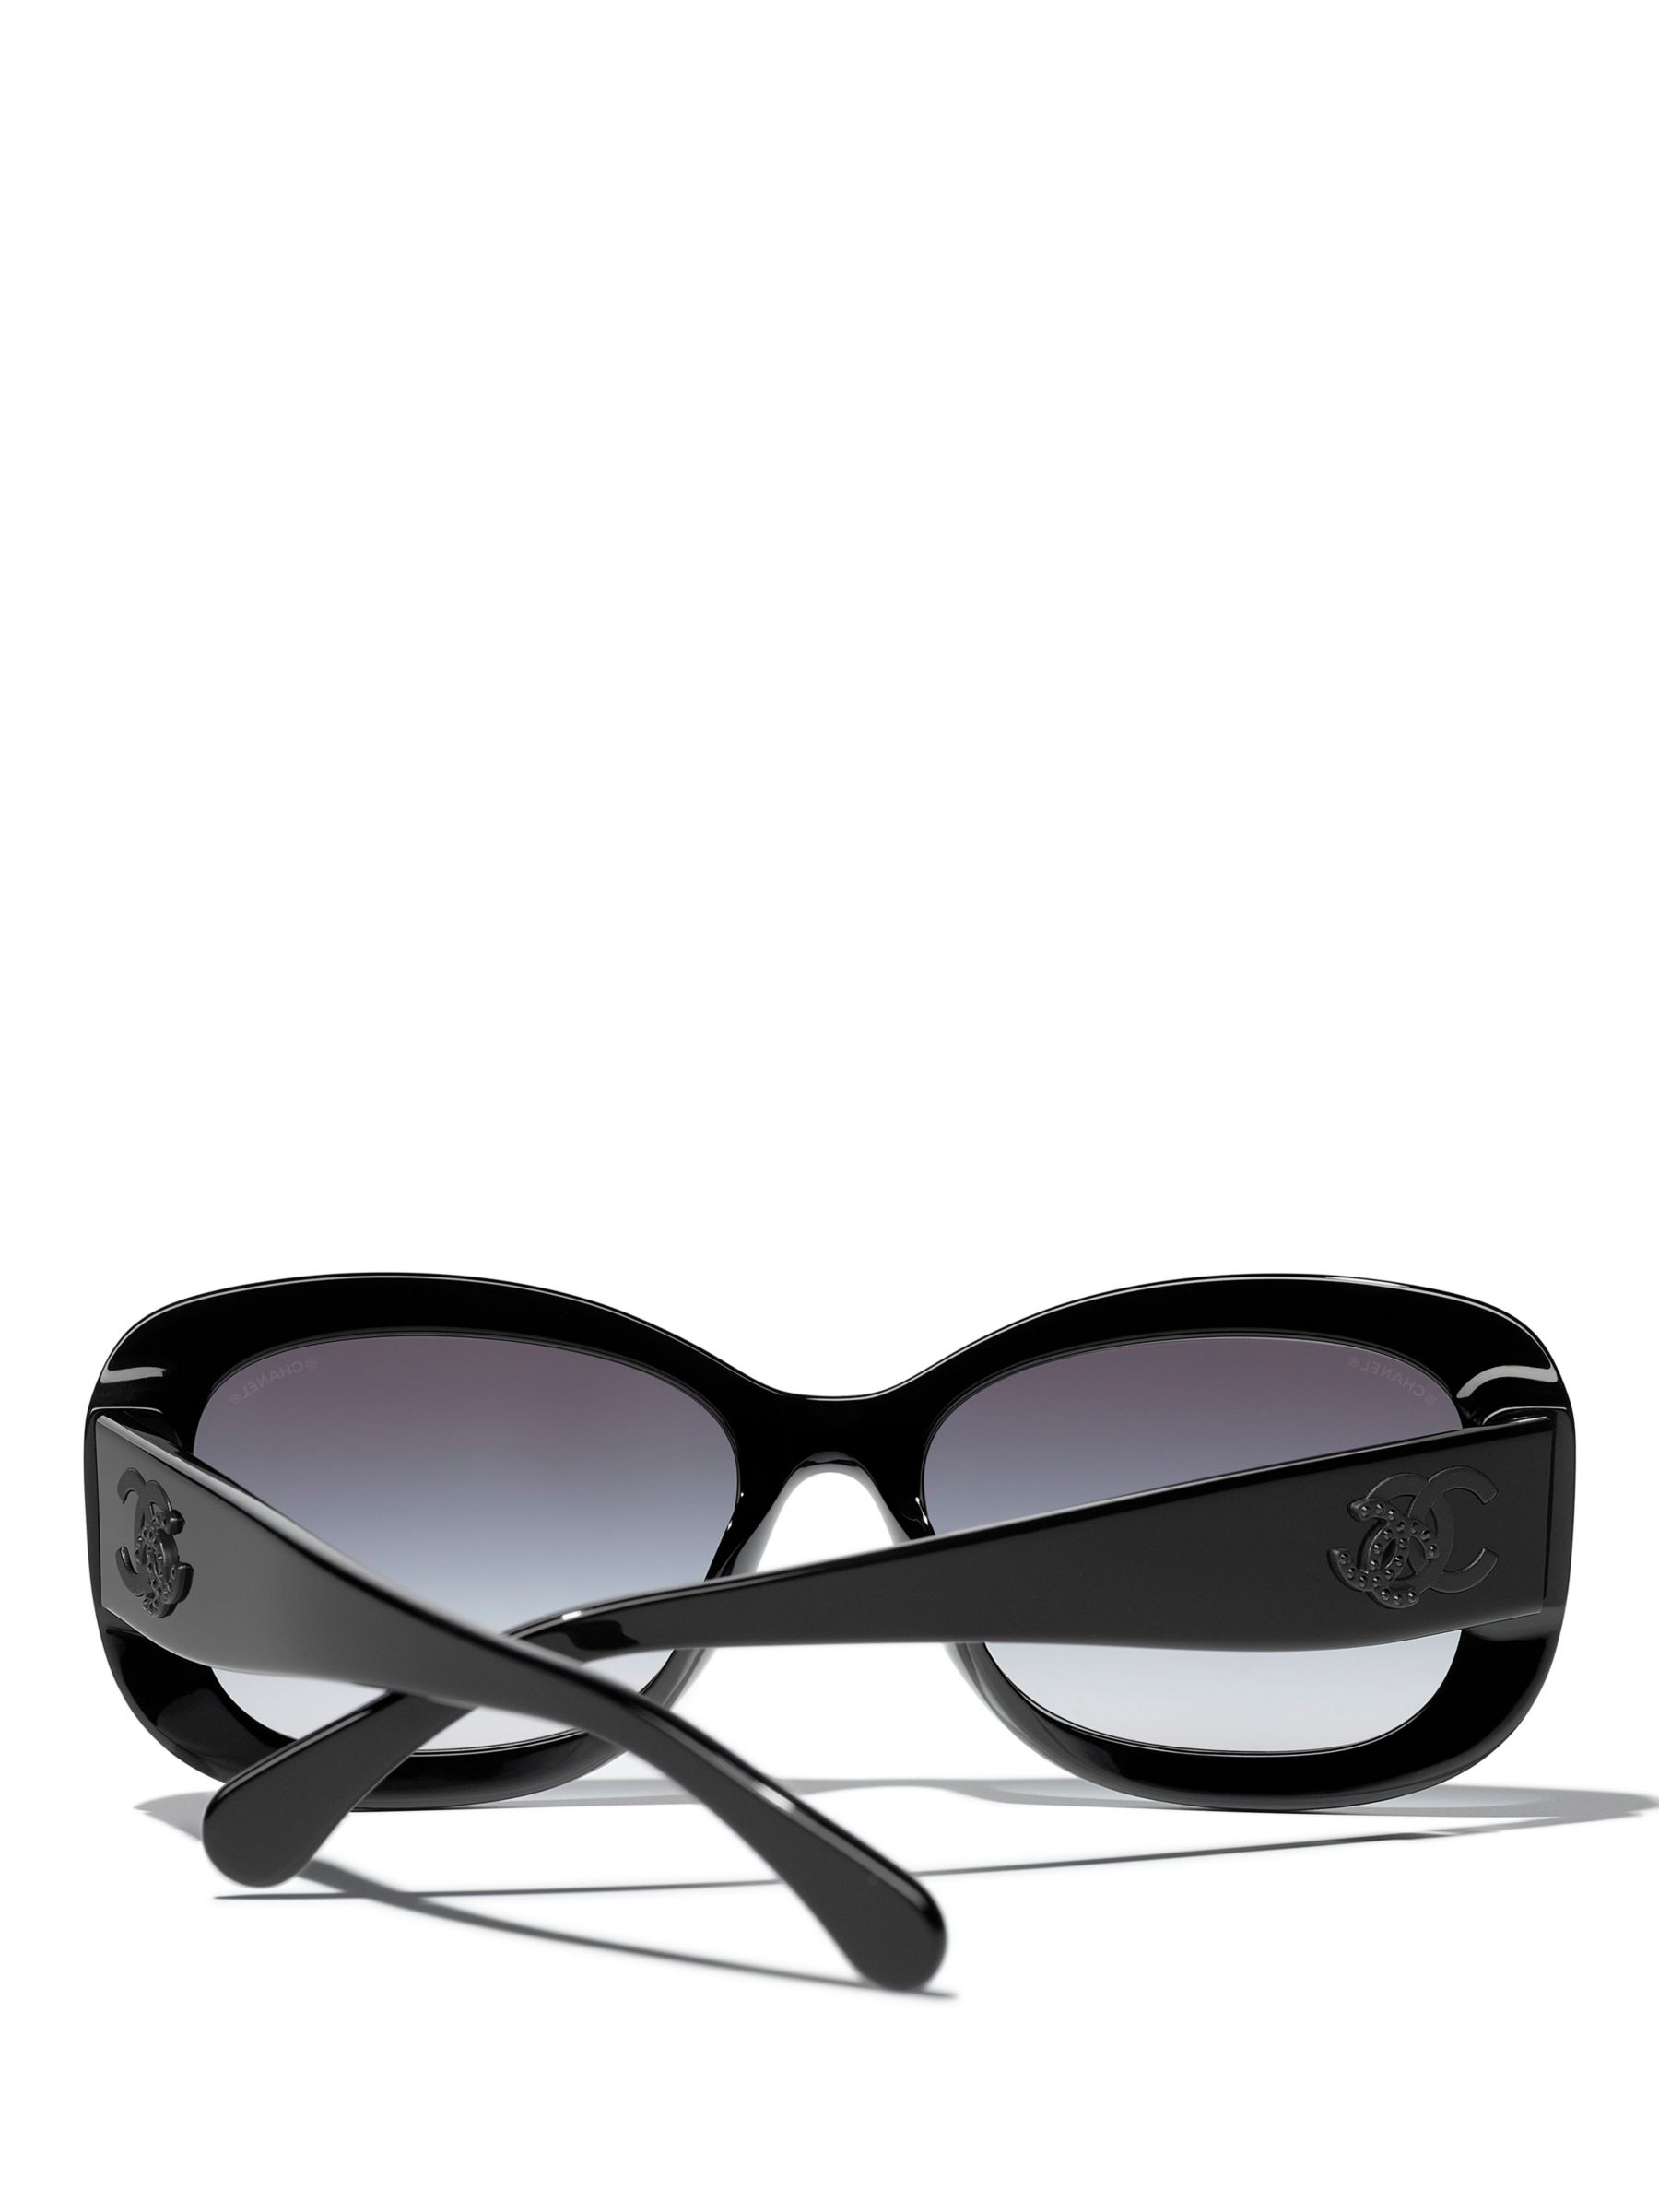 Buy CHANEL Irregular Sunglasses CH5468B Black/Blue Gradient Online at johnlewis.com